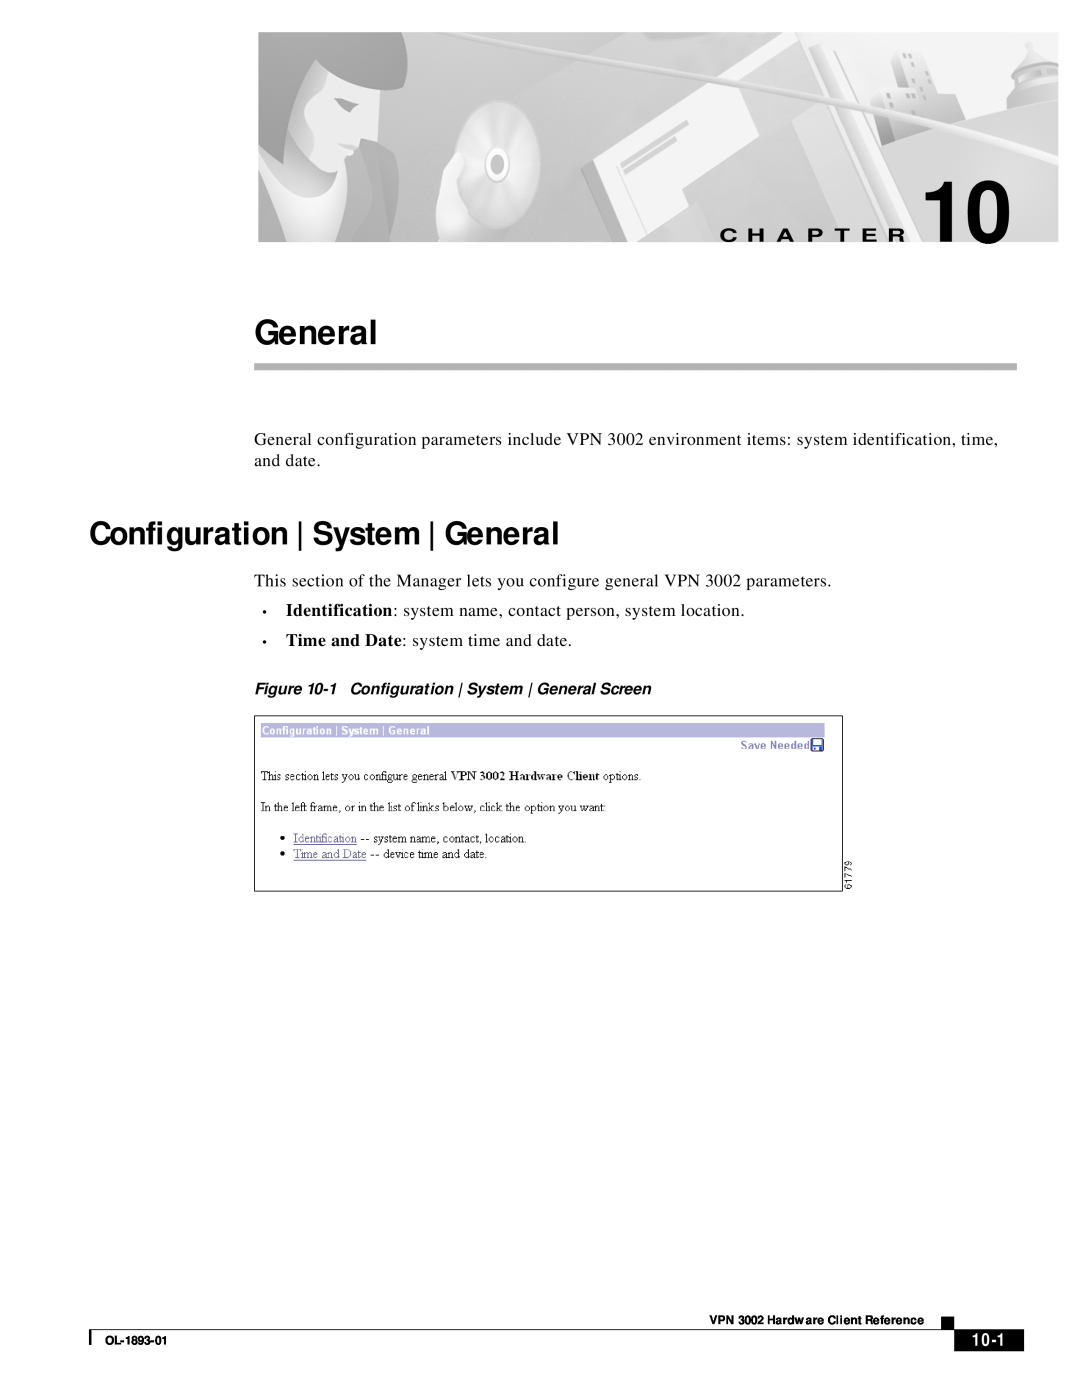 Cisco Systems VPN 3002 manual Configuration | System | General, 10-1, C H A P T E R 